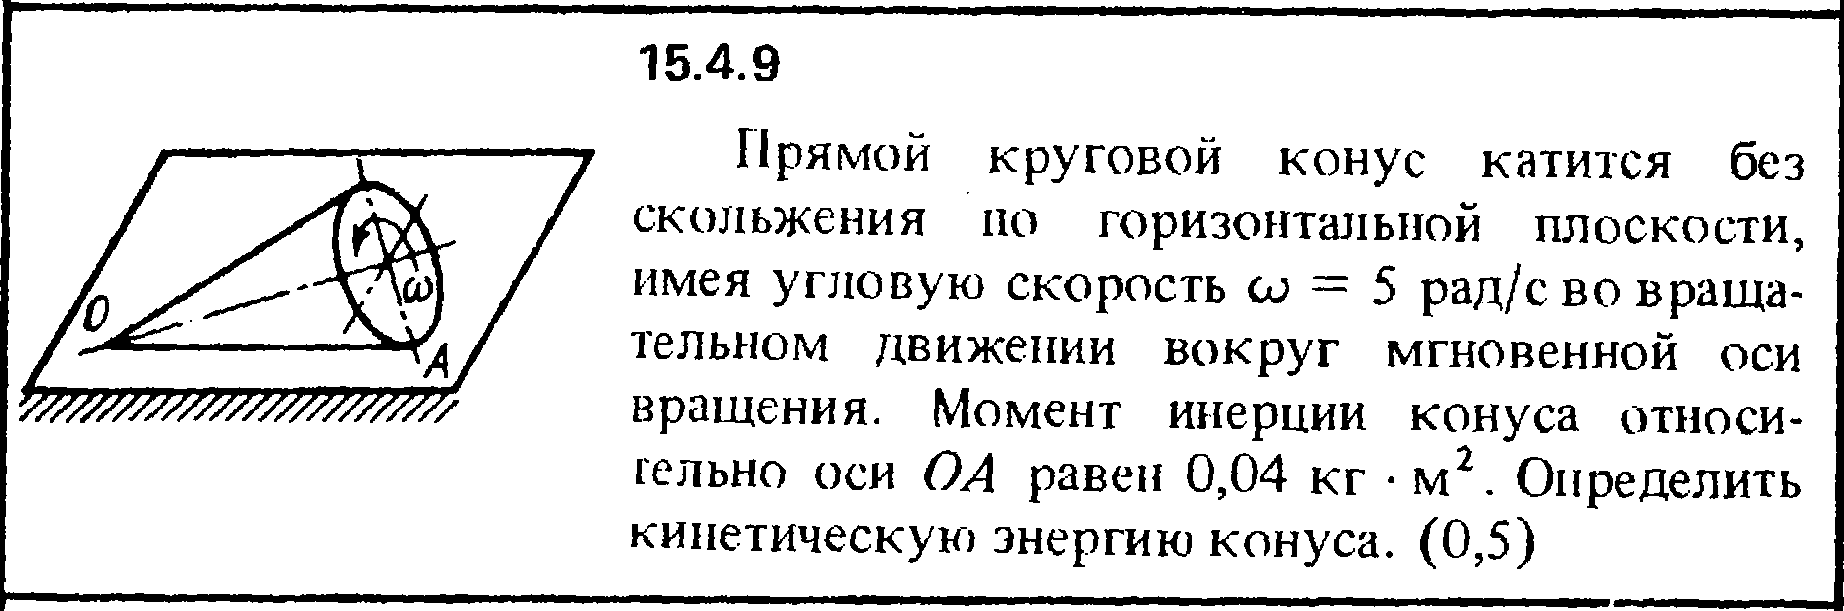 Решение задачи 15.4.9 из сборника Кепе О.Е. 1989 года